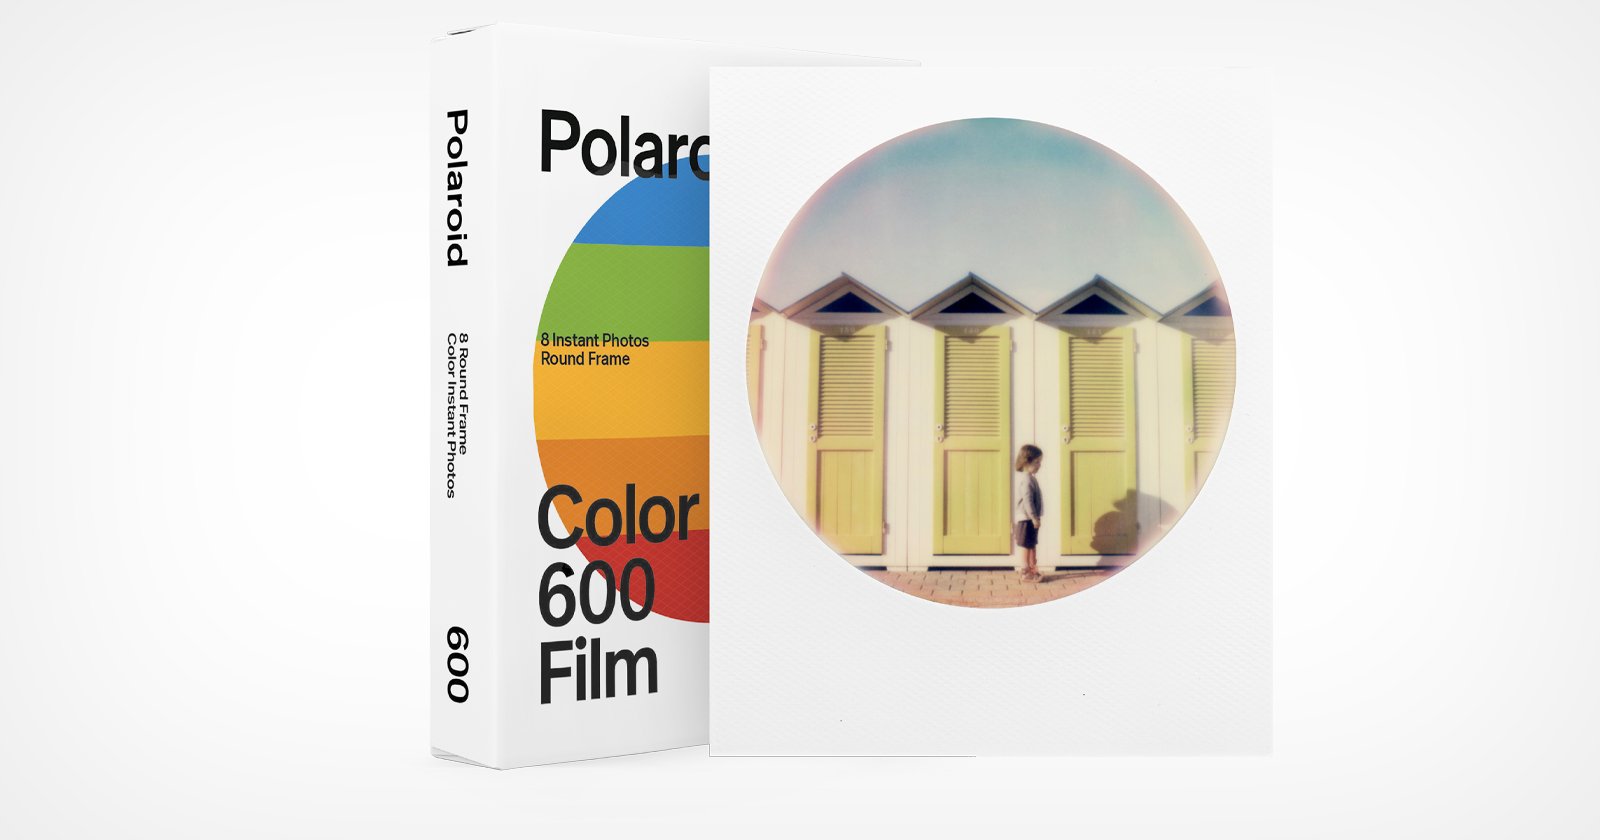 Polaroid Announces the Return of the 600 Round Frame Instant Film